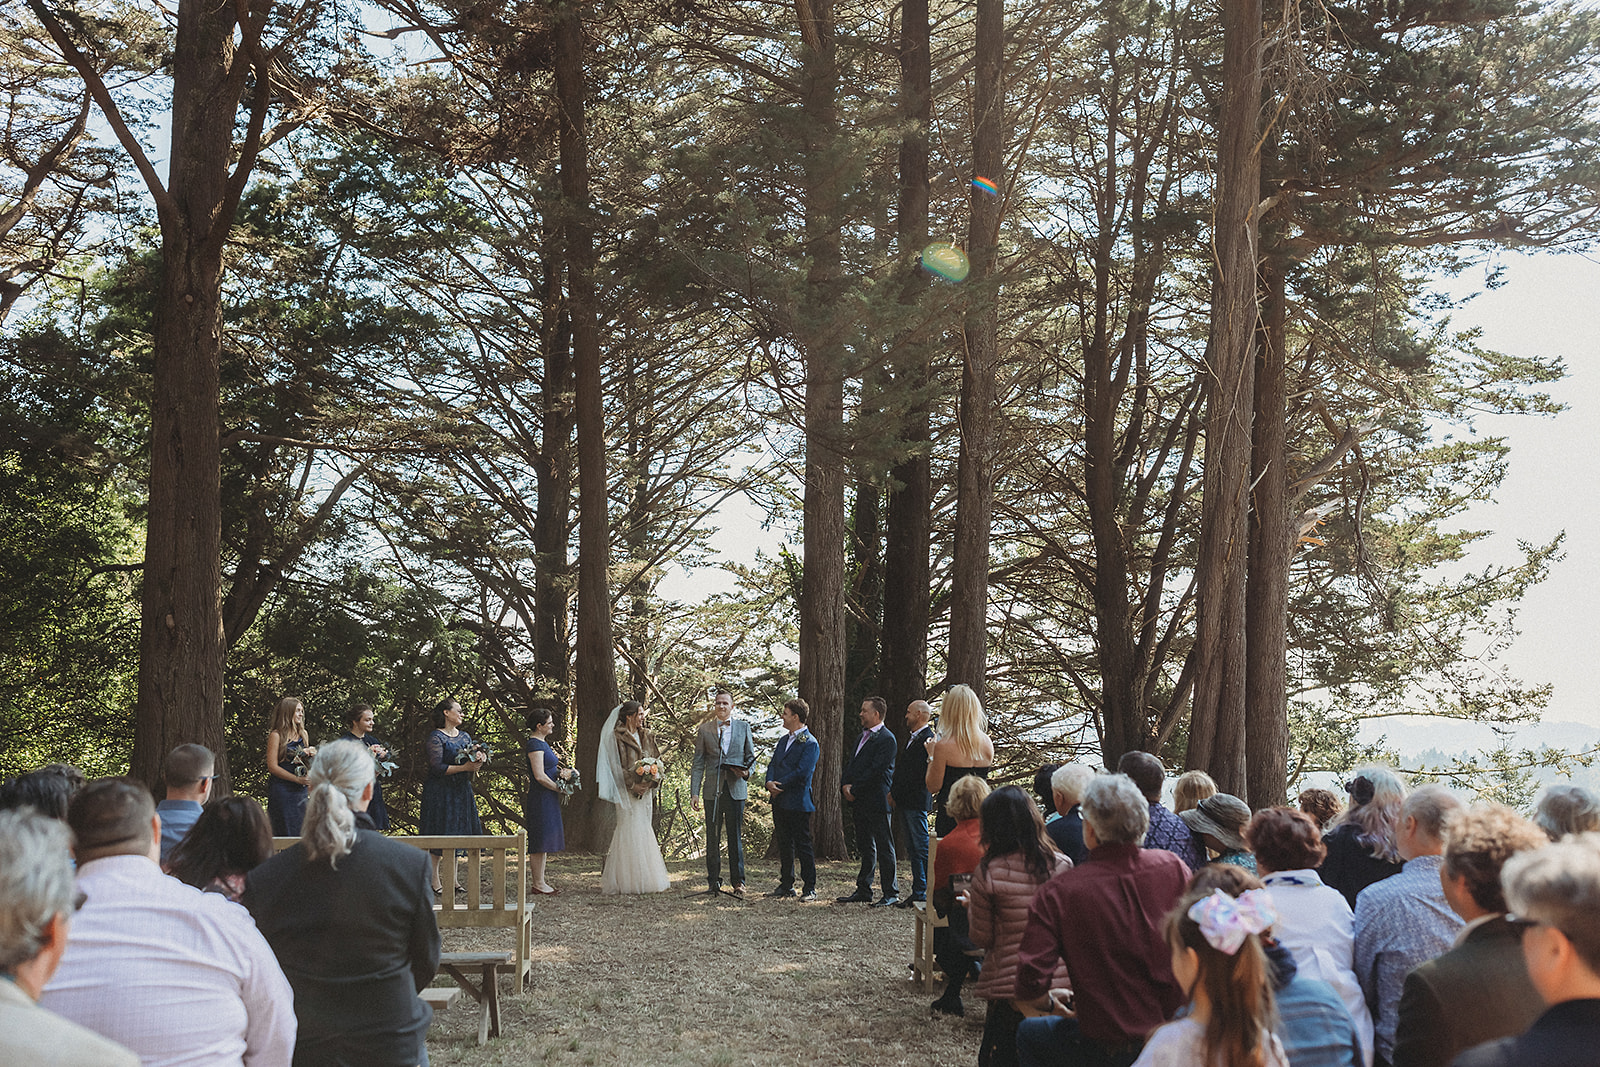 Outdoor wedding ceremony in Marin County, CA